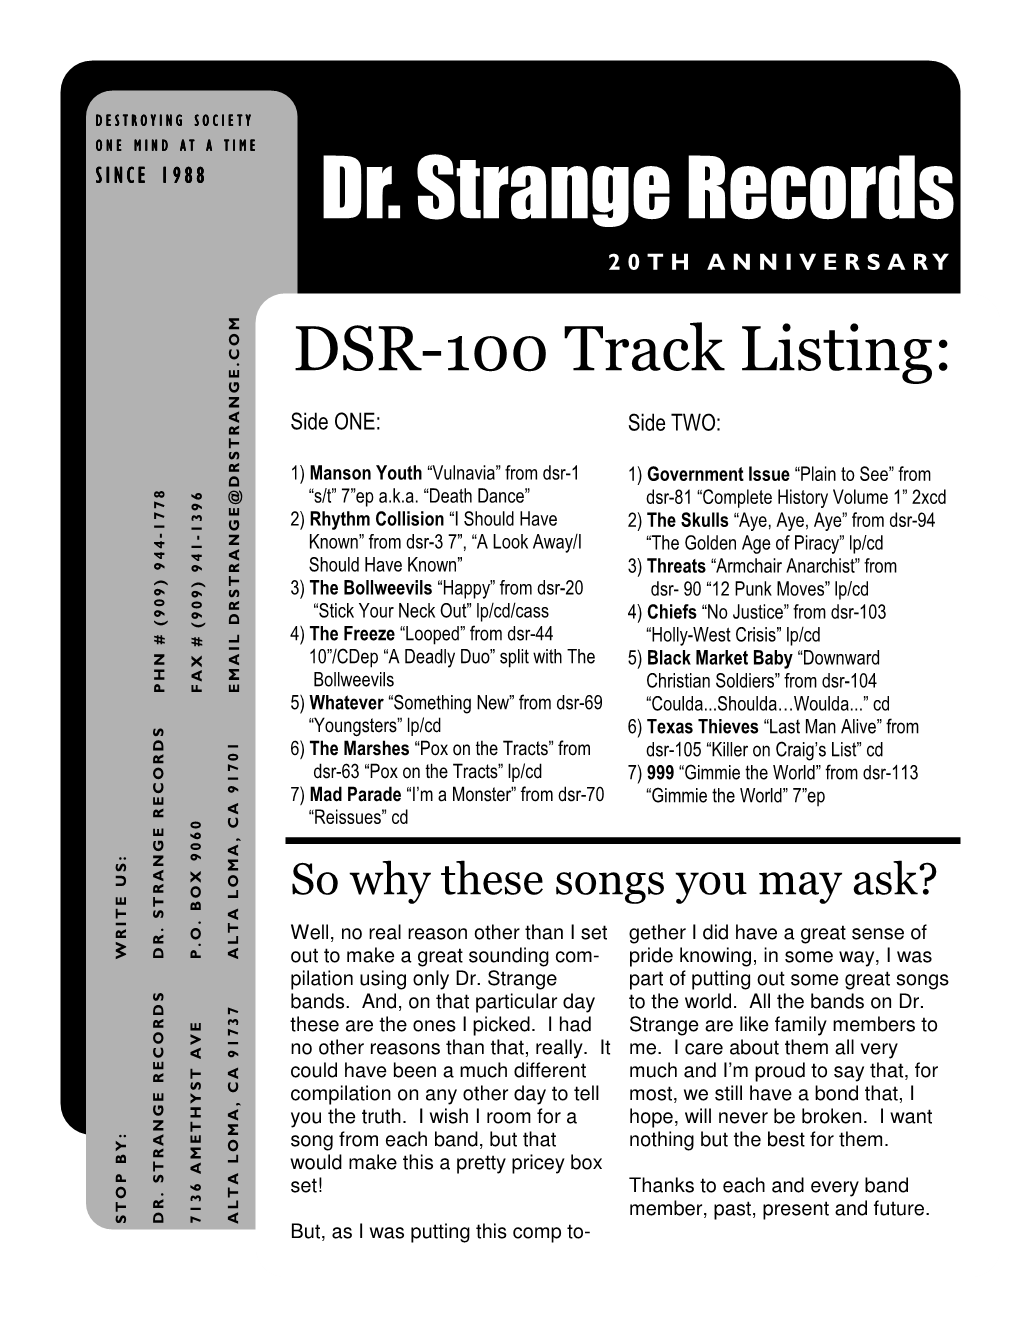 Dr. Strange Records